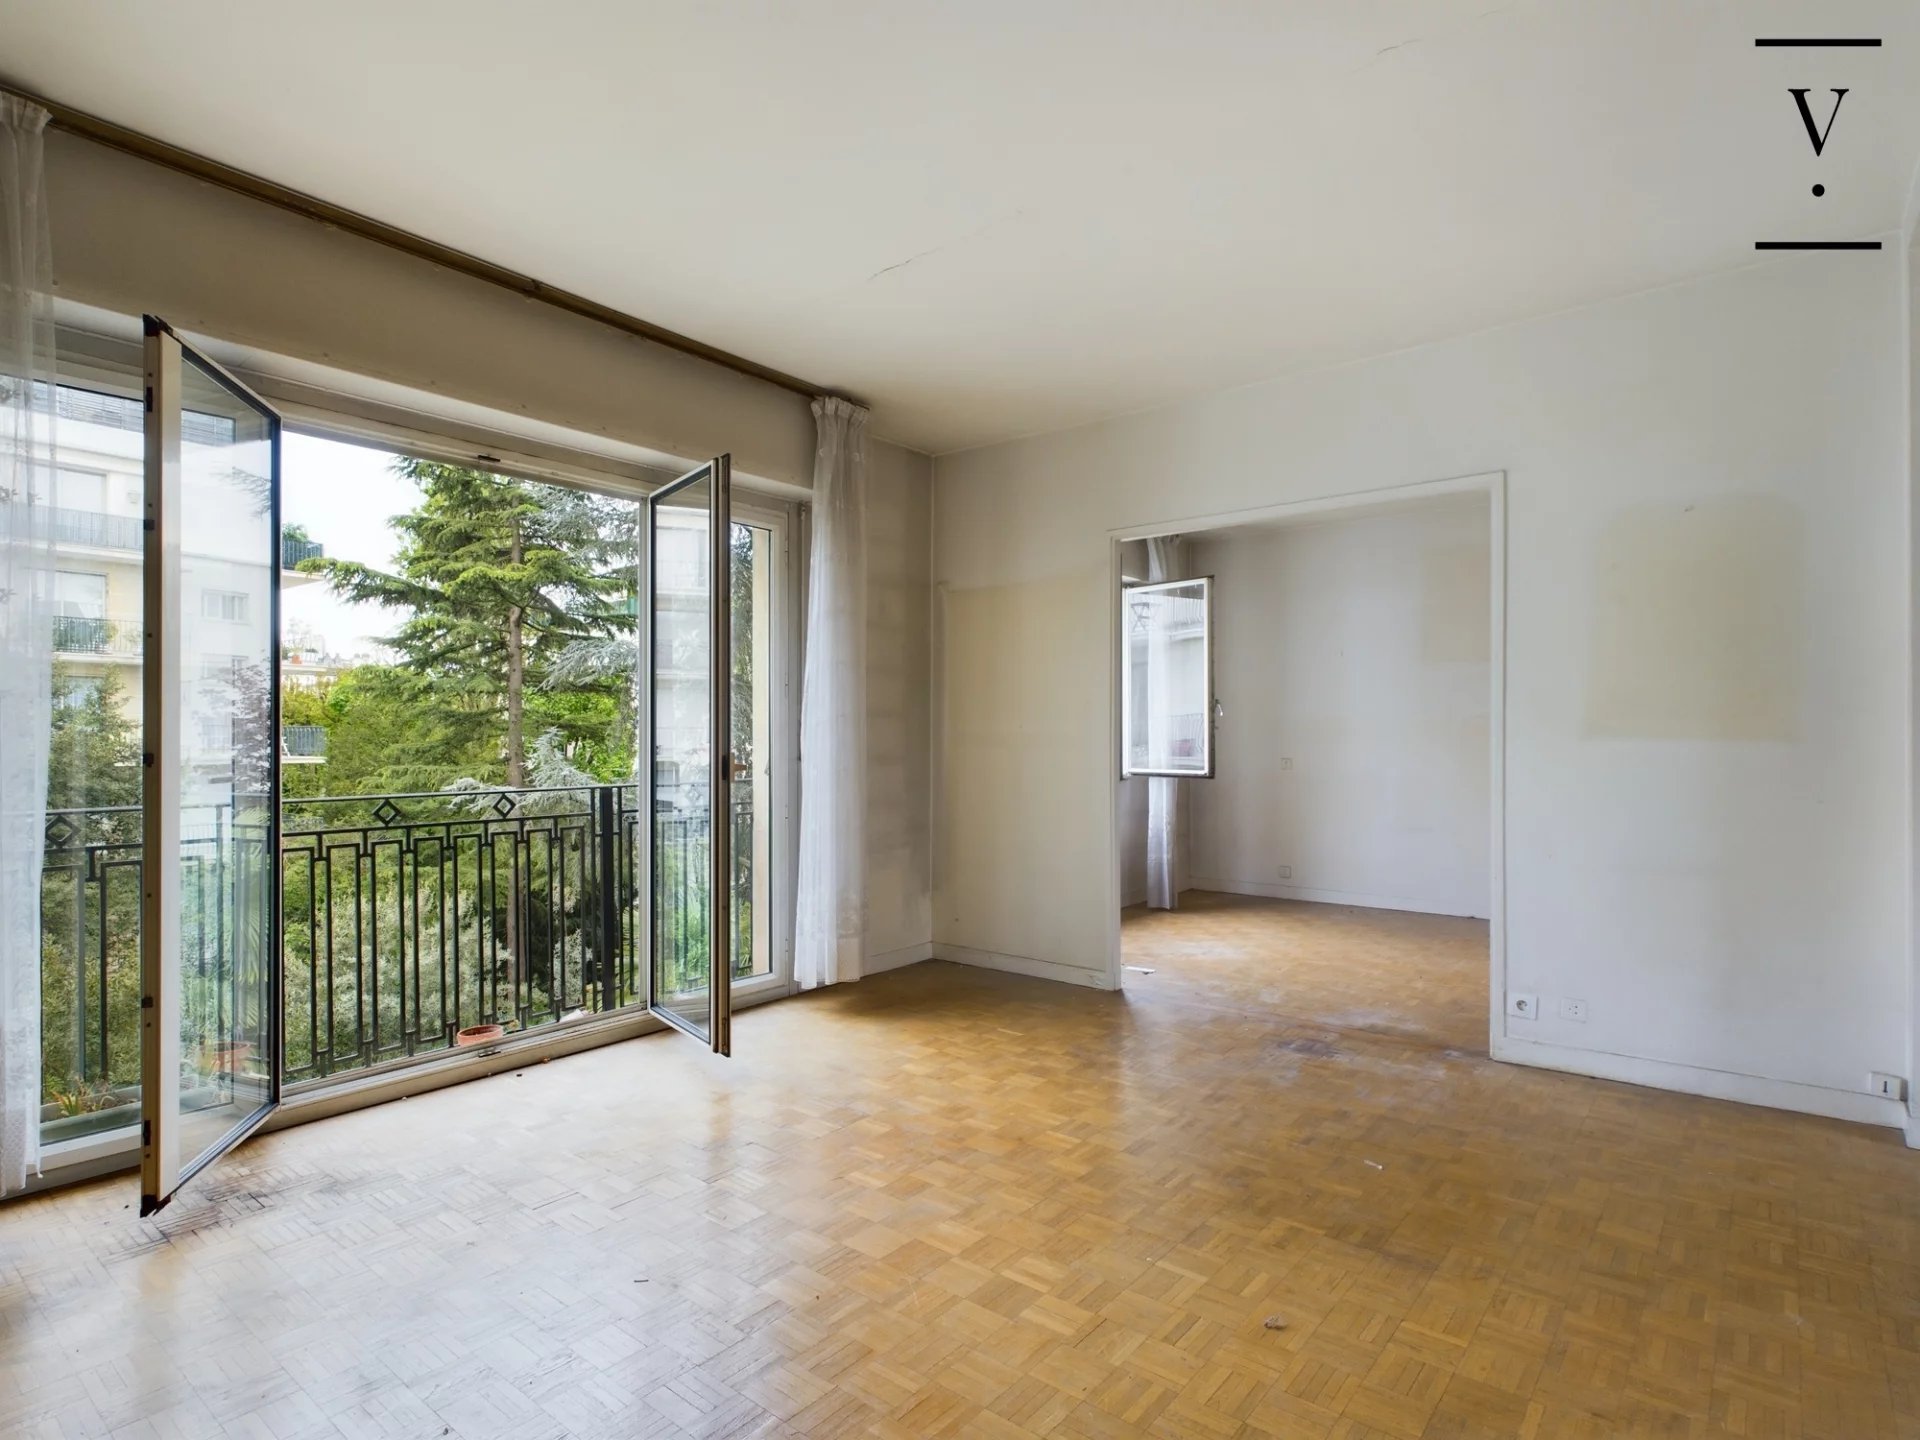 Appartement a louer neuilly-sur-seine - 2 pièce(s) - 53.88 m2 - Surfyn